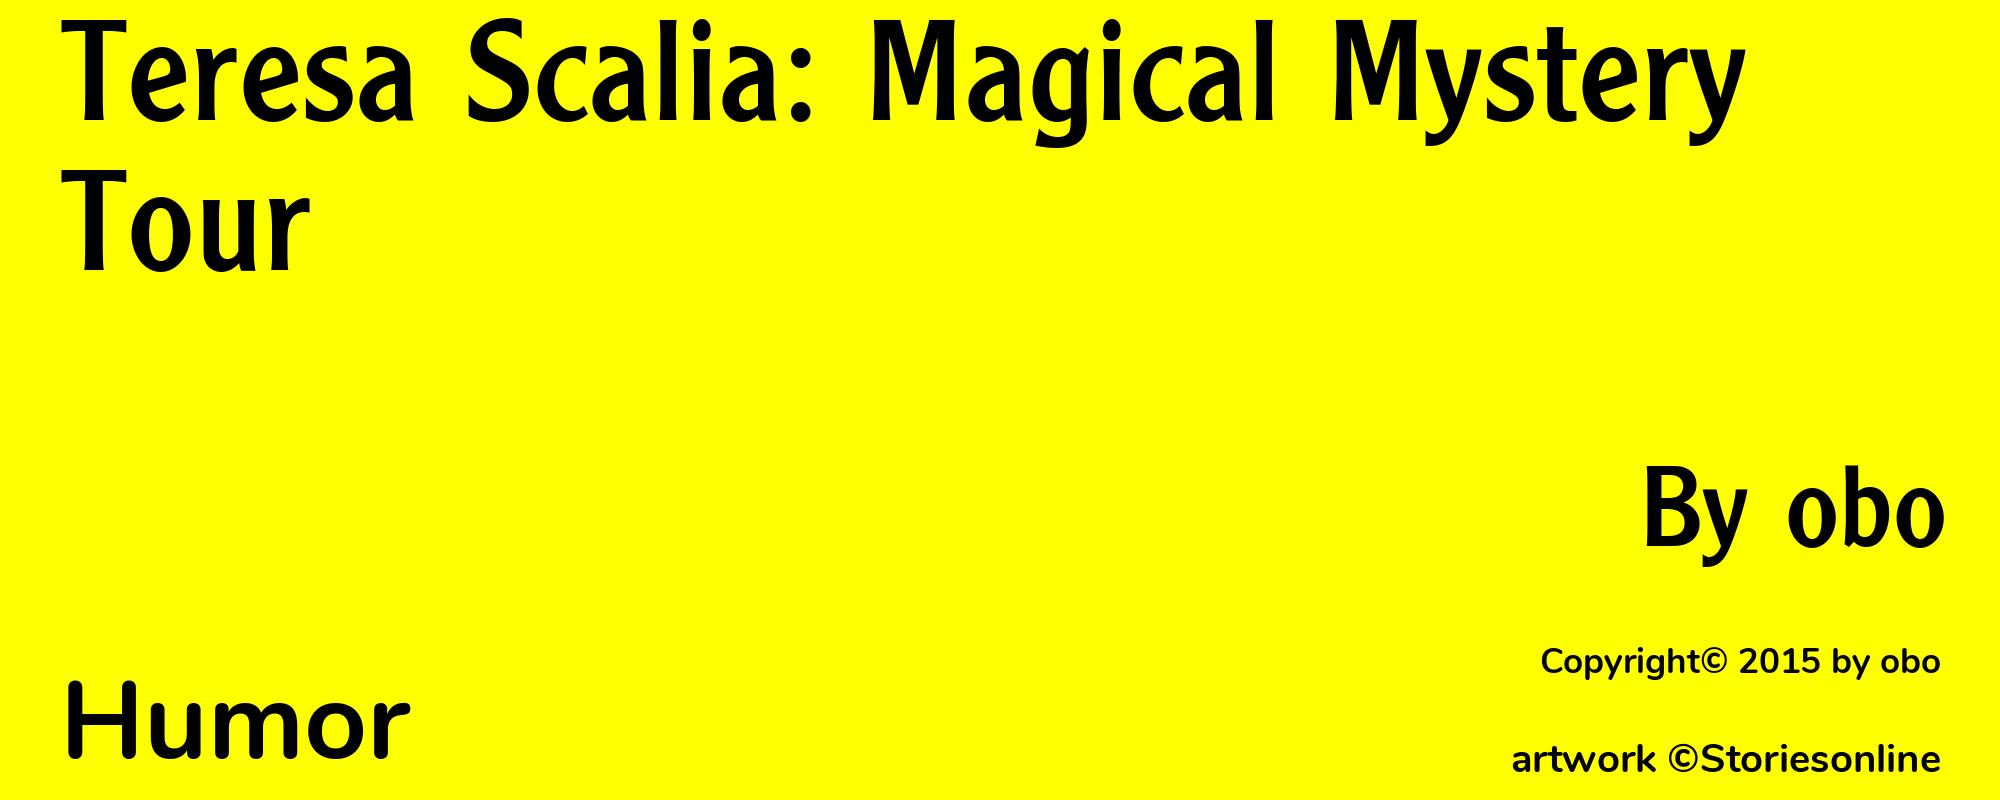 Teresa Scalia: Magical Mystery Tour - Cover